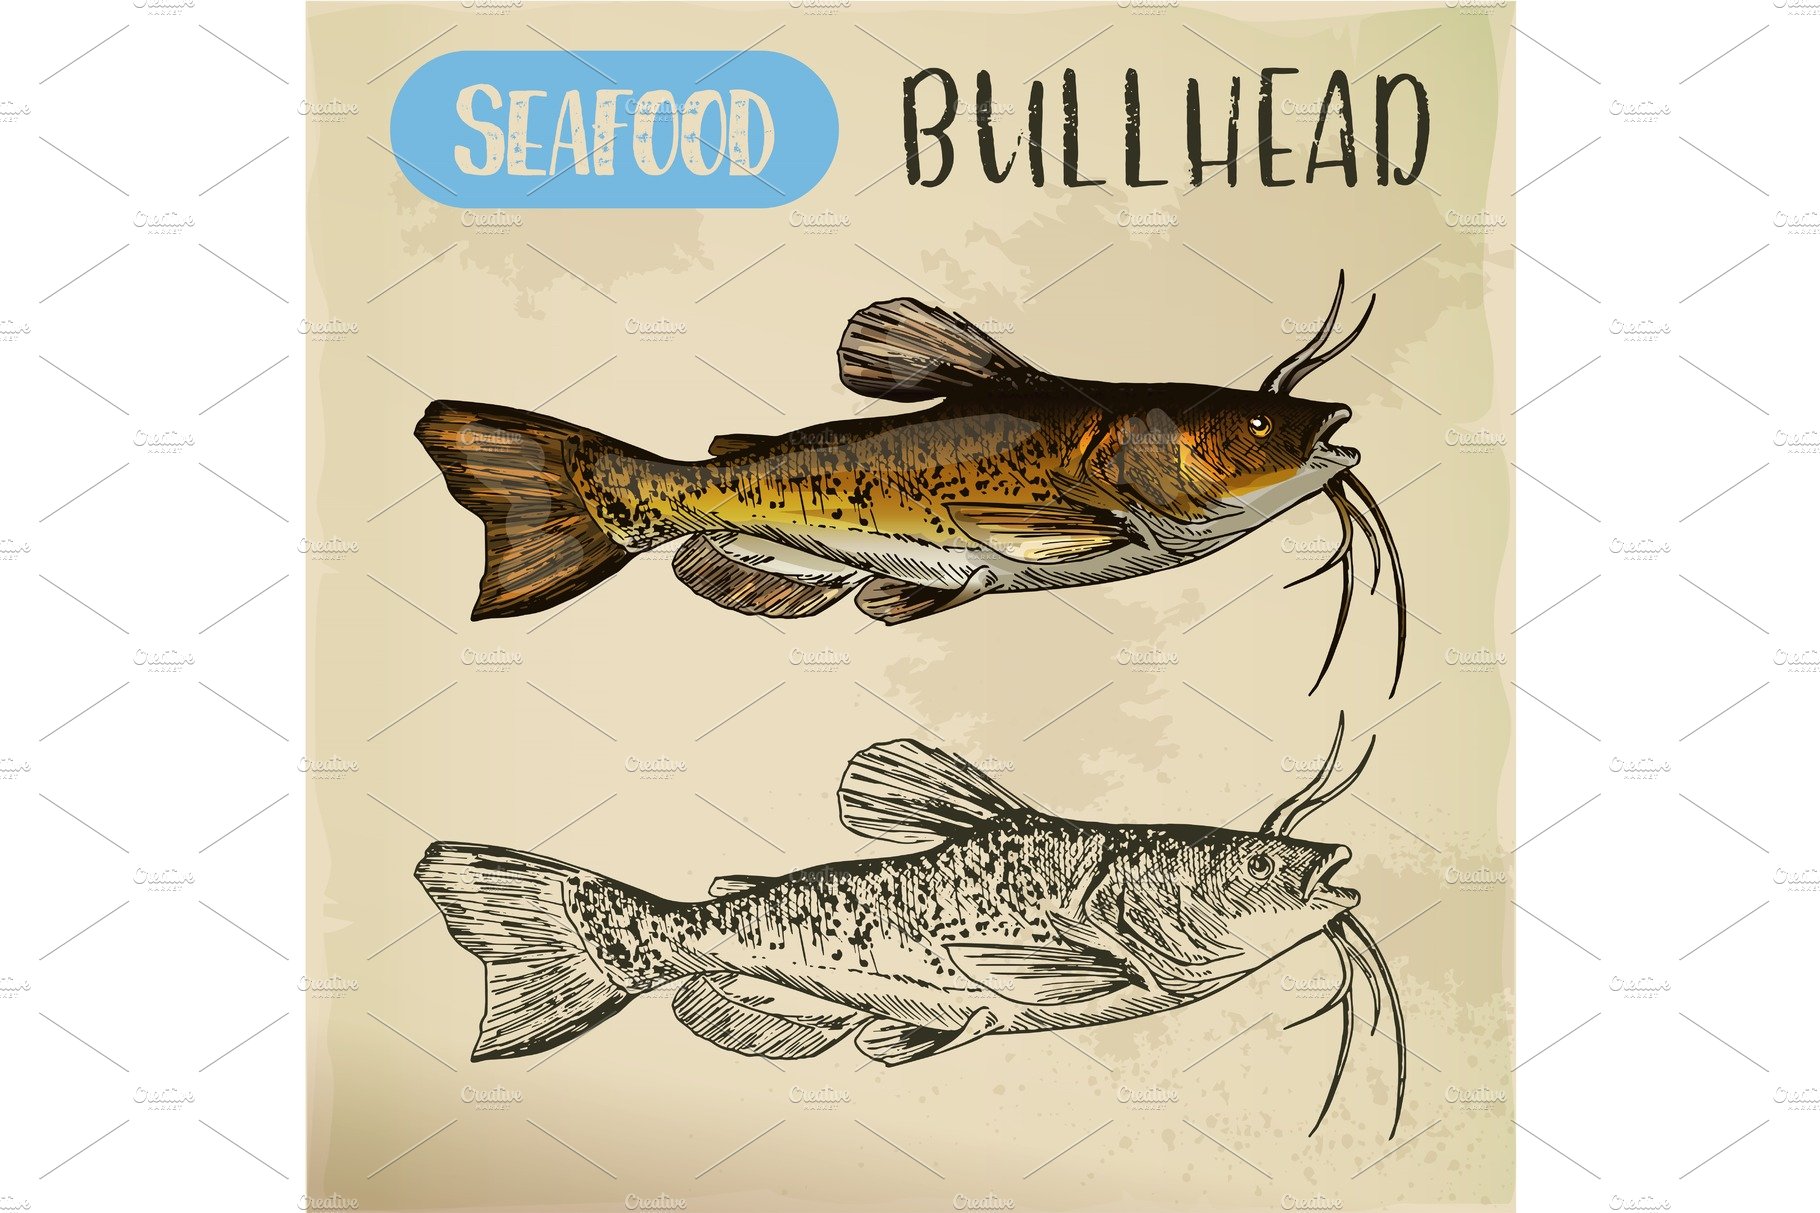 Sketch of bullhead or sculpin fish cover image.